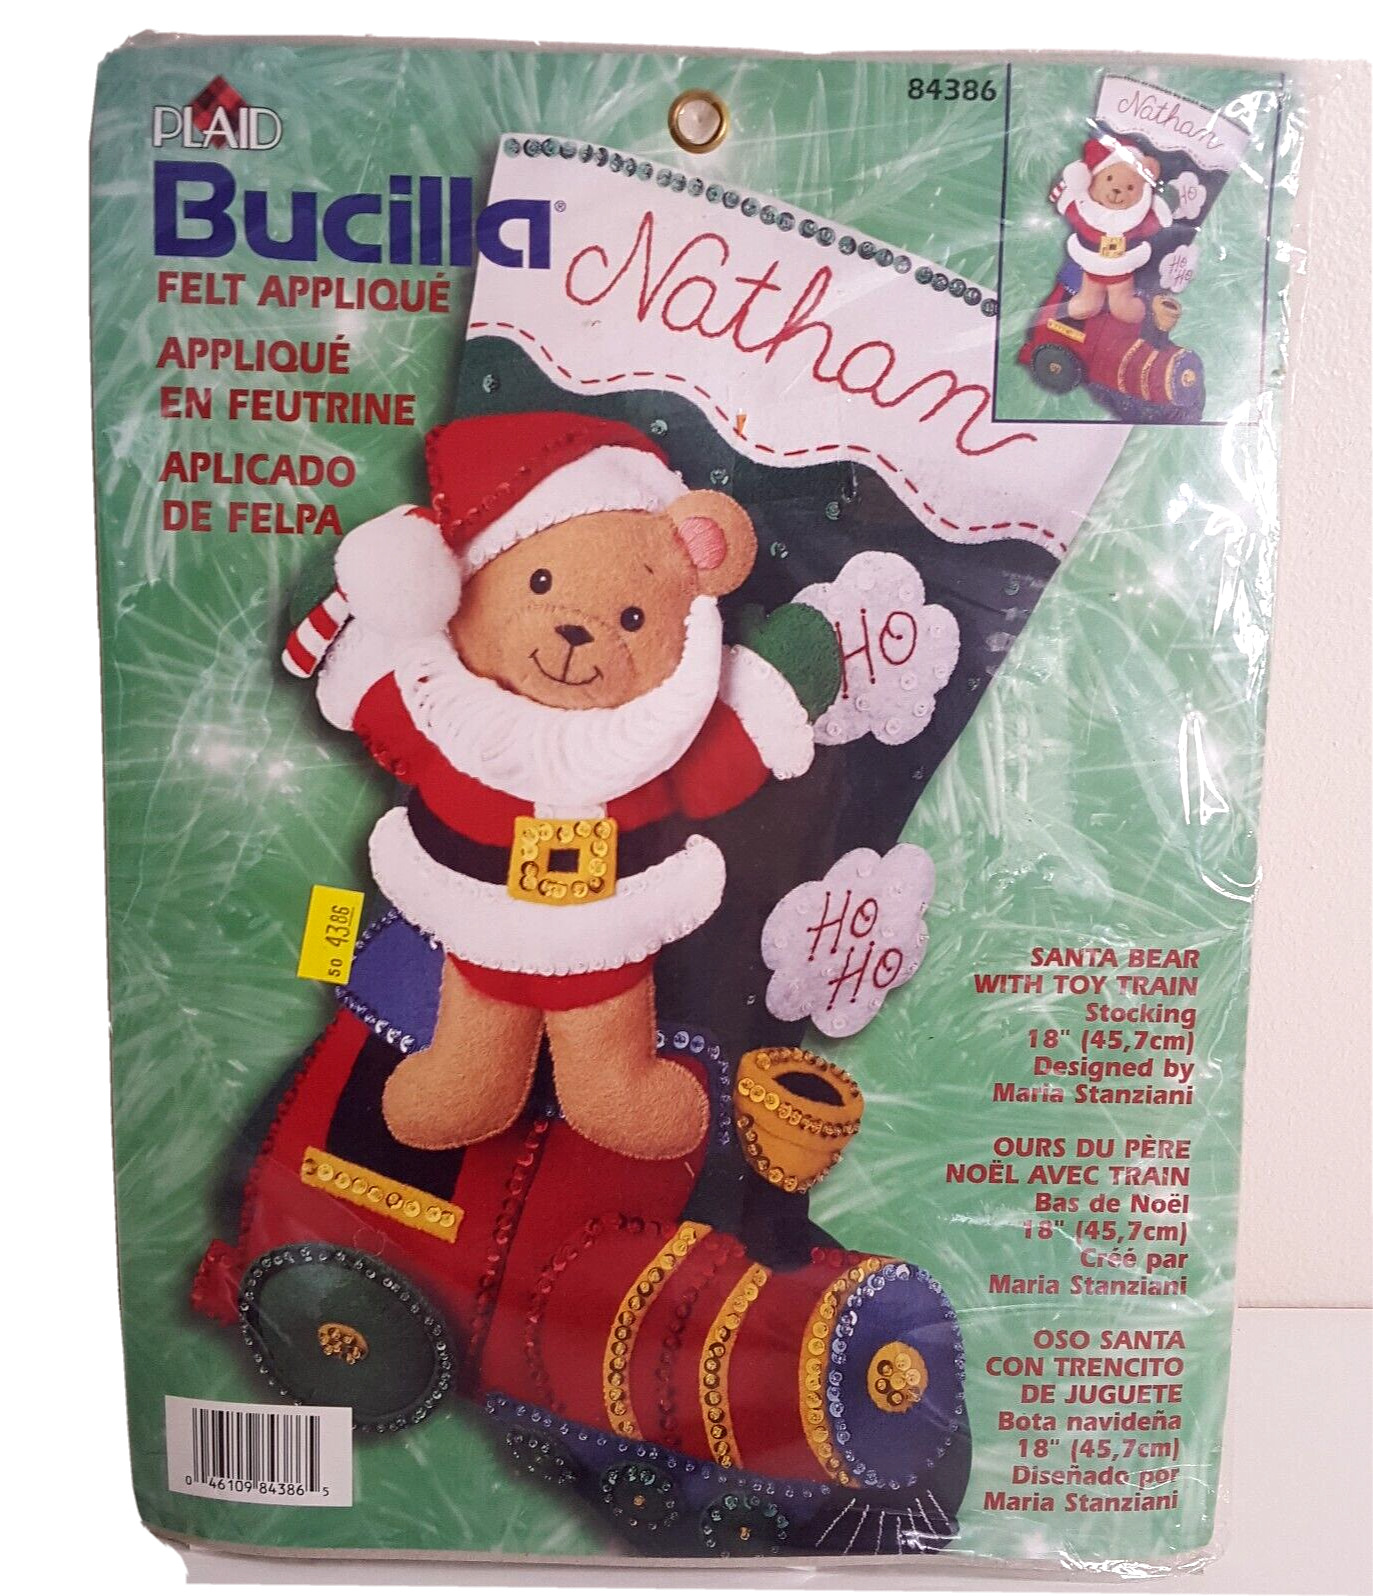 Plaid Bucilla Christmas Felt Stocking Kit SANTA BEAR WITH TOY TRAIN #84386 NEW